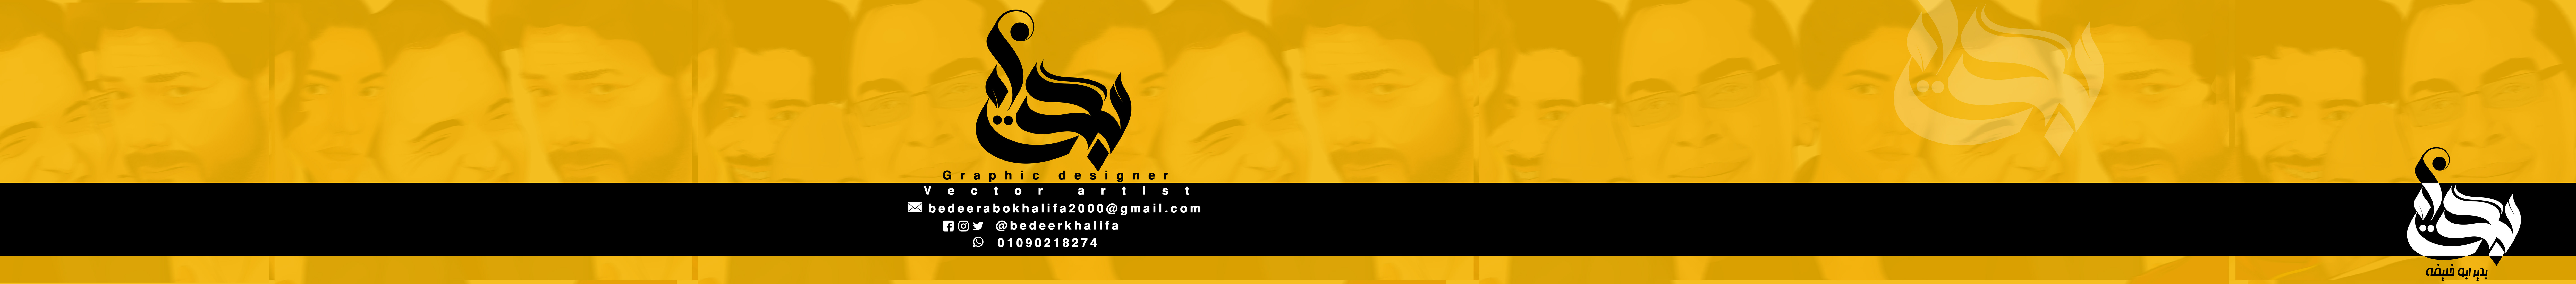 Banner profilu uživatele Bedeer Abo-Khalifa